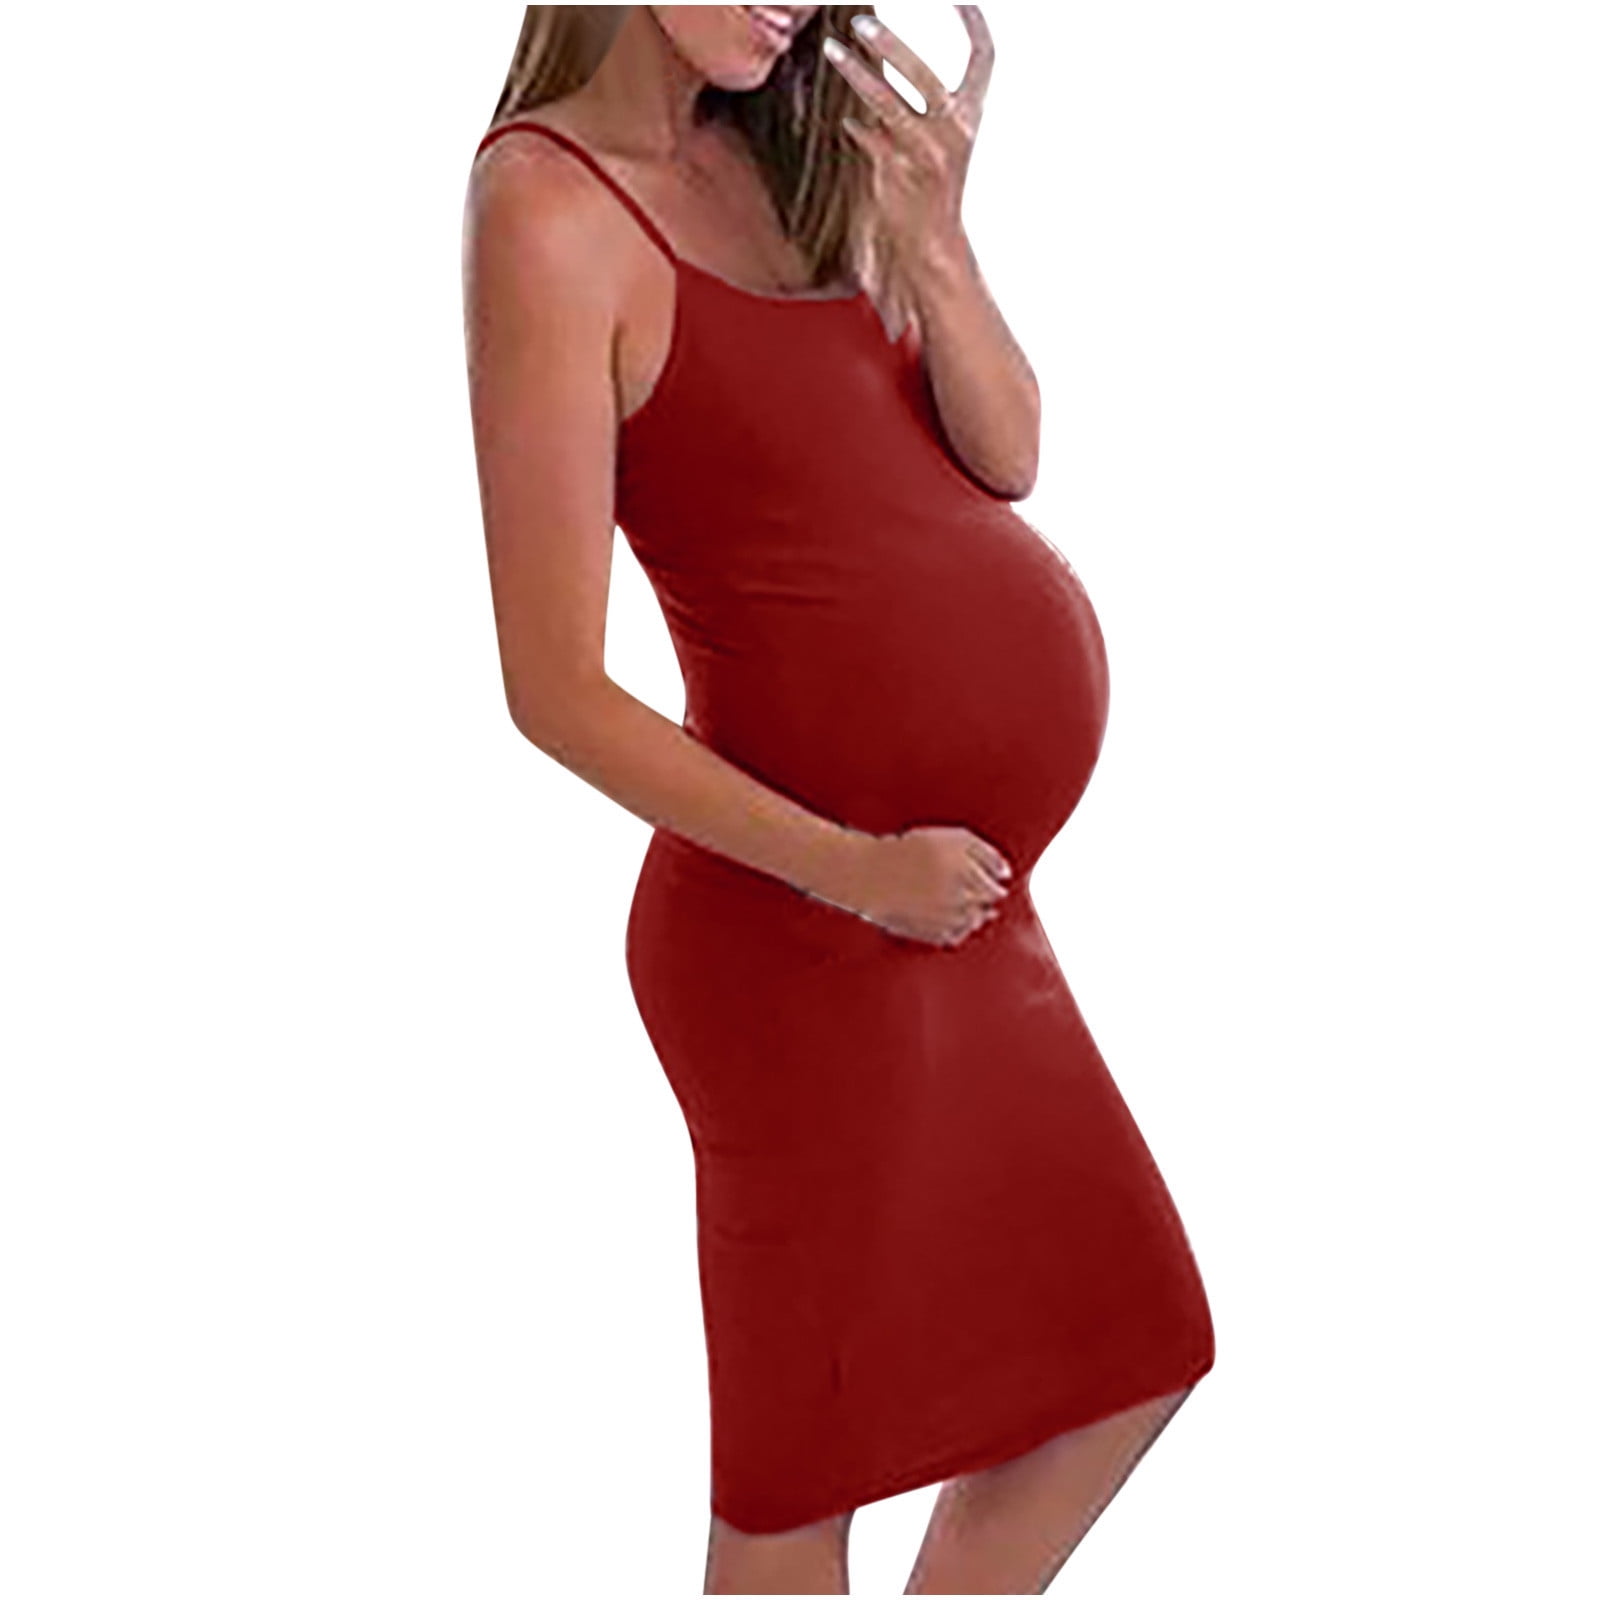 gakvbuo Maternity Dress For Women Plus Size Summer Baby Shower Pregnancy Dresses Photoshoot Clothing Sleeveless Round Neck Medium Long With Suspender 03d6e146 a66f 4428 8f54 035531fb0b0a.7962b87f16dae147a3c593f536ae65ba